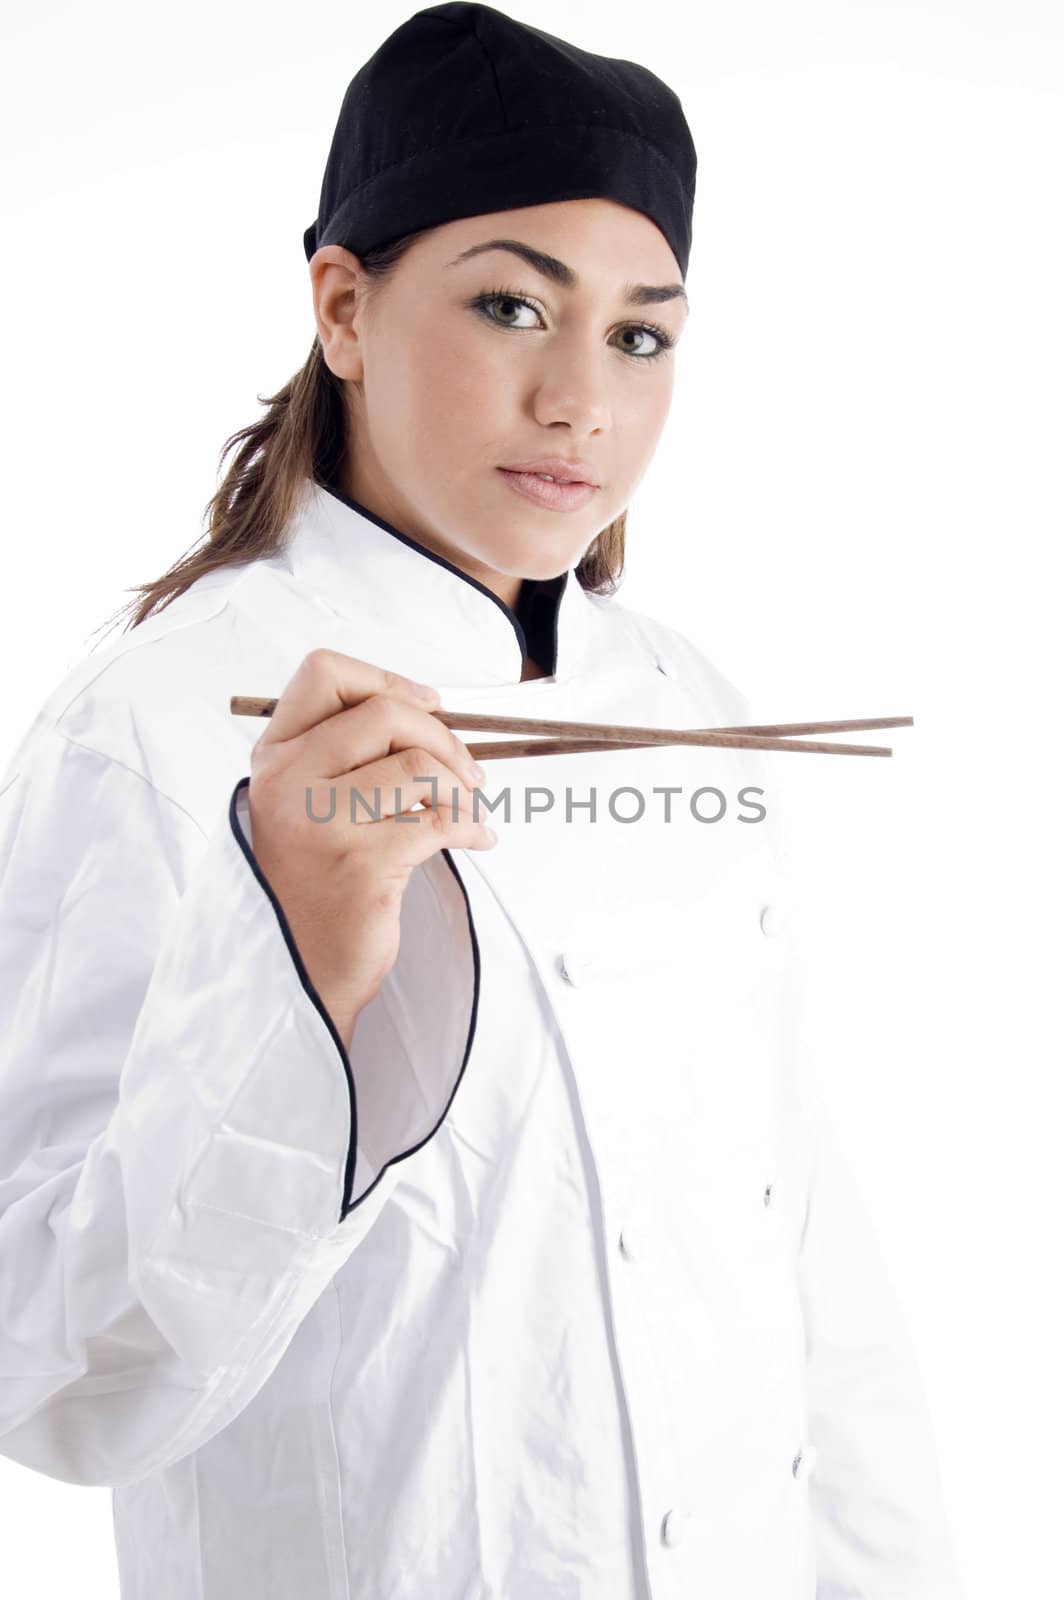 professional female chef holding chopstick by imagerymajestic